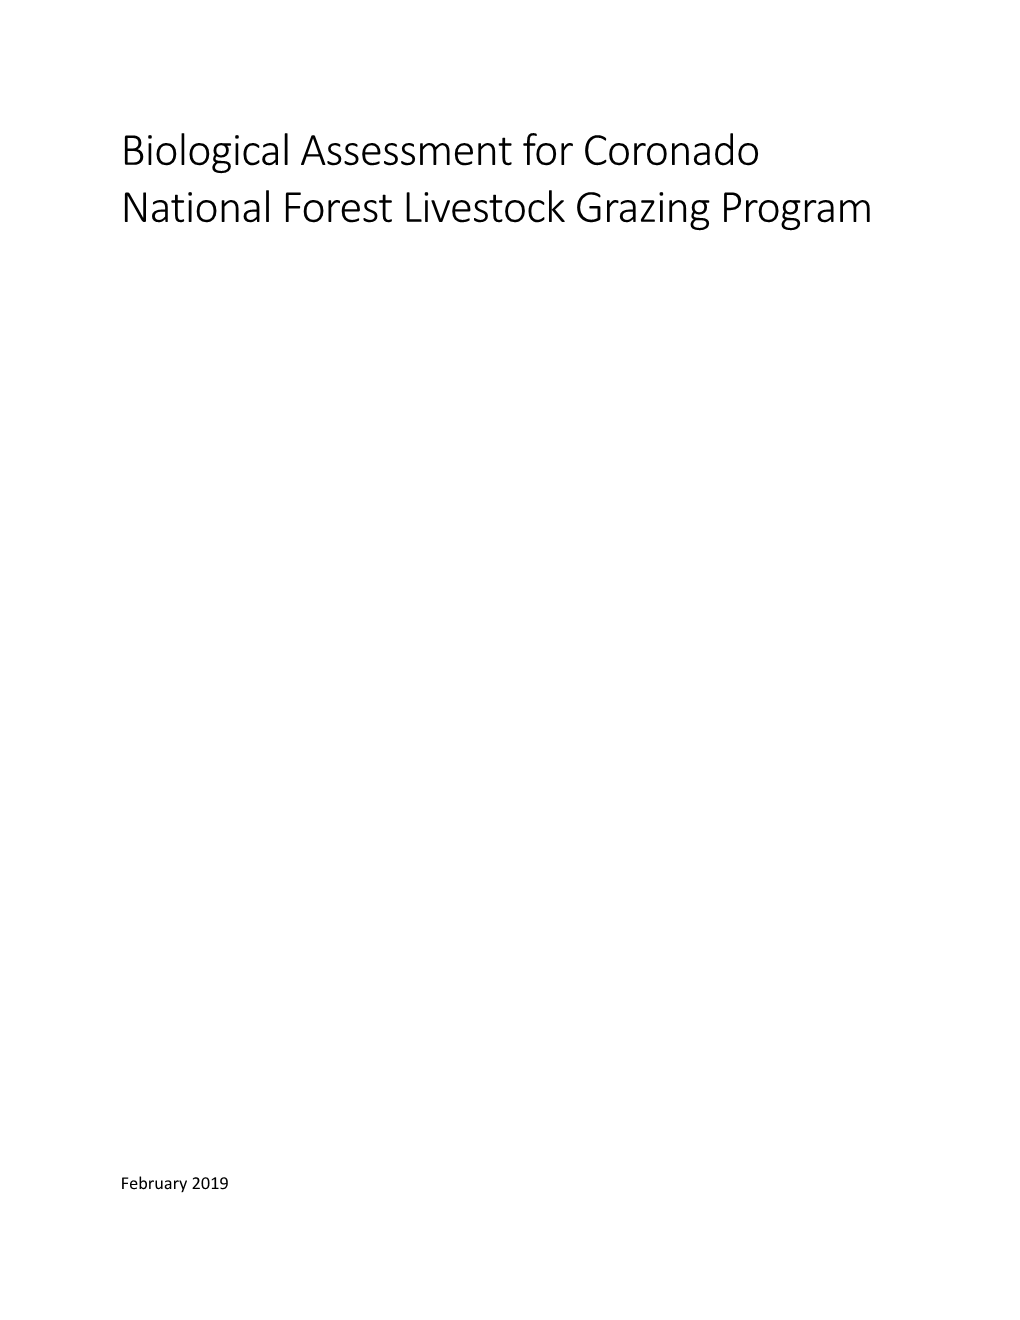 Biological Assessment for Coronado National Forest Livestock Grazing Program